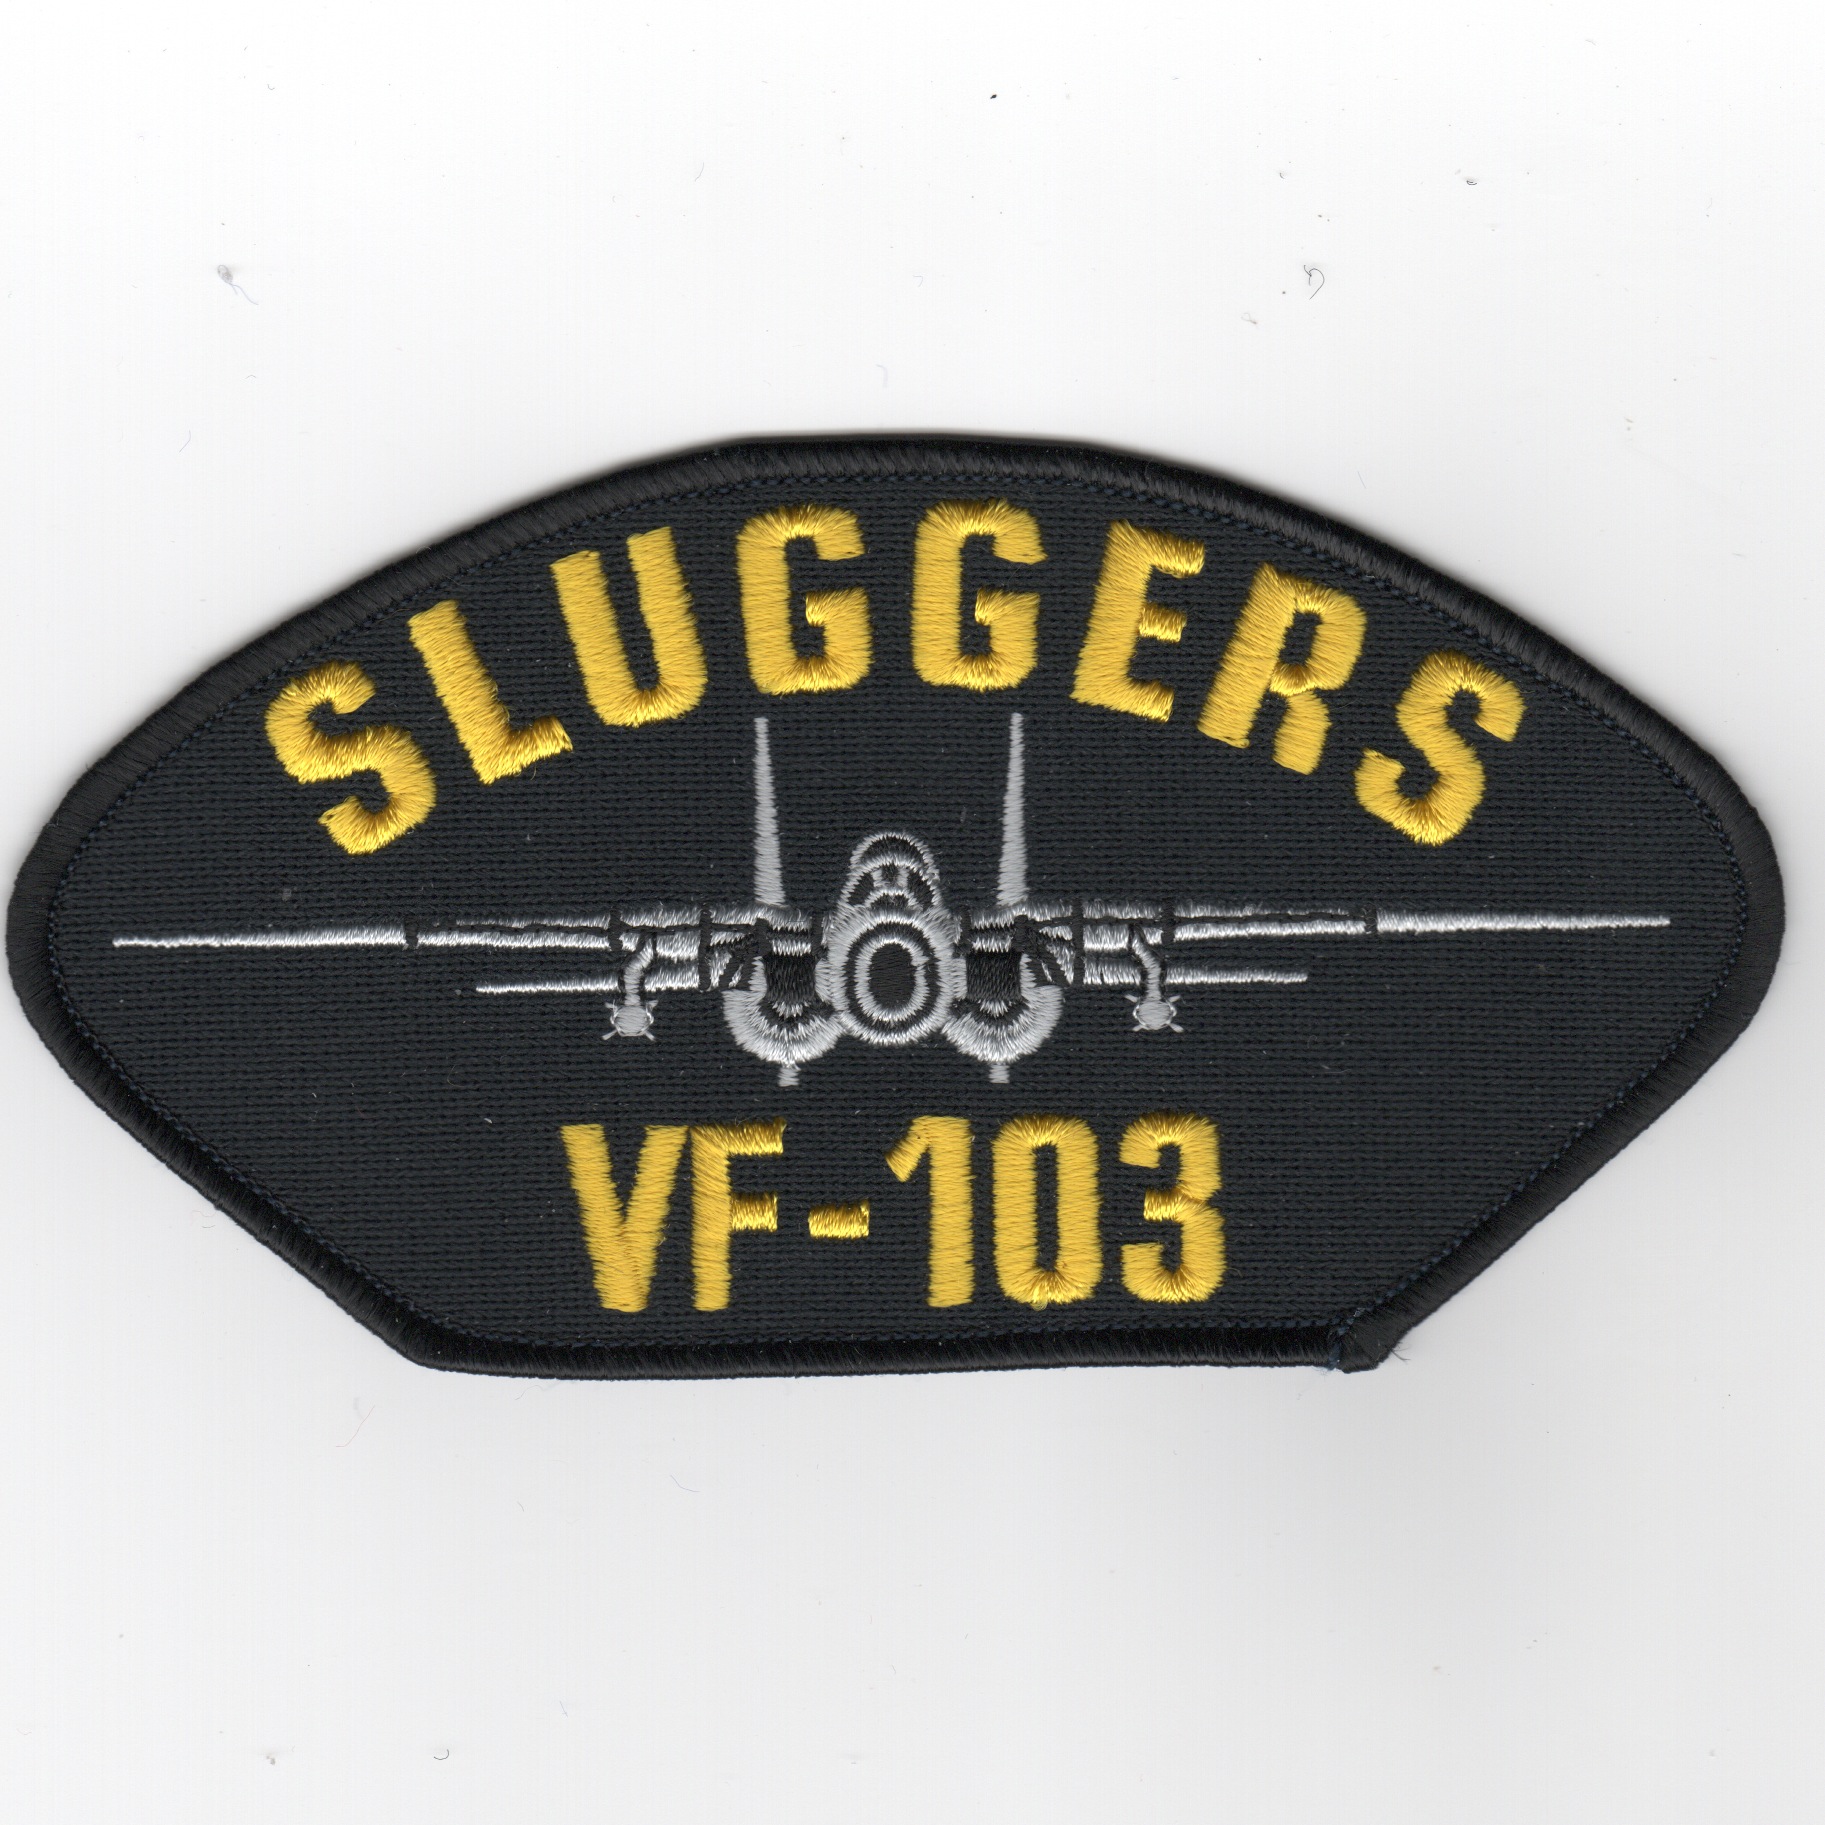 VF-103 'Sluggers' Ballcap Patch